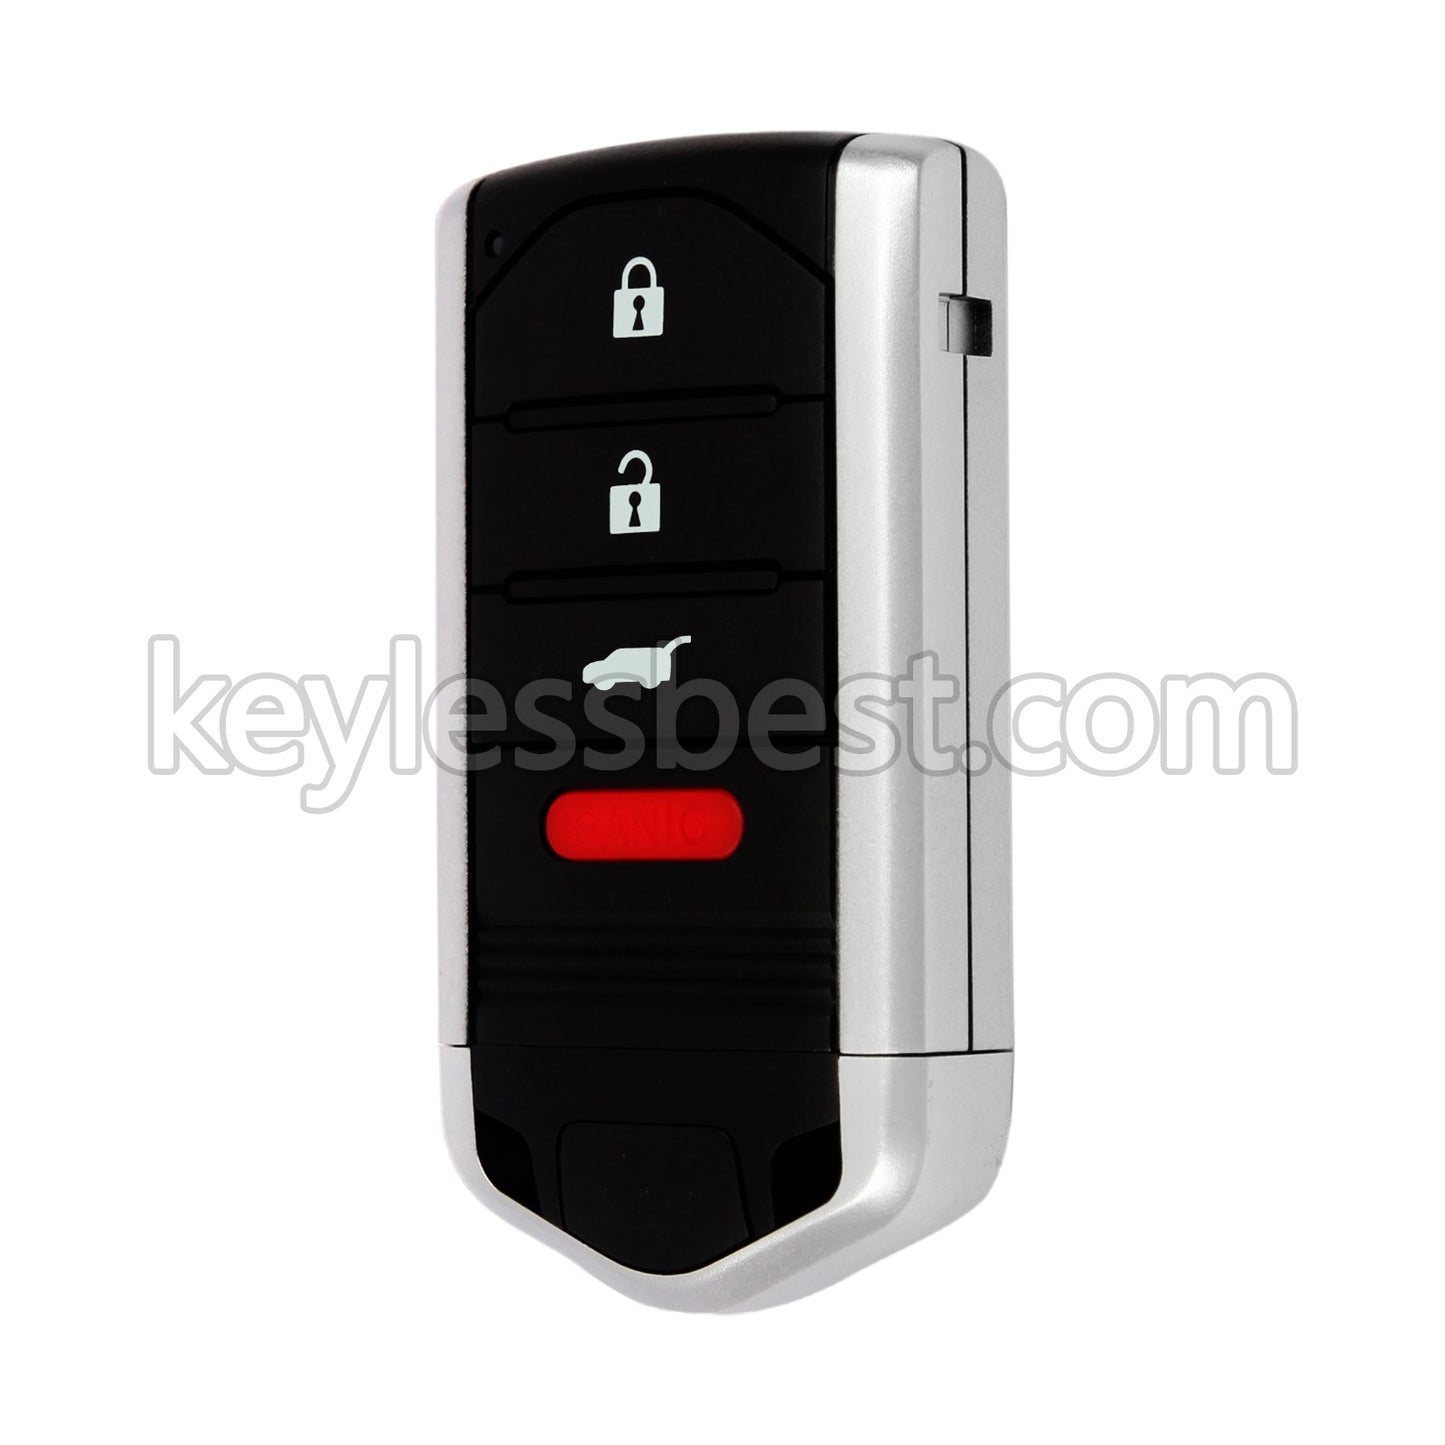 2010 - 2013 Honda Acura ZDX / 4 Buttons Remote Key / M3N5WY8145 / 314MHz